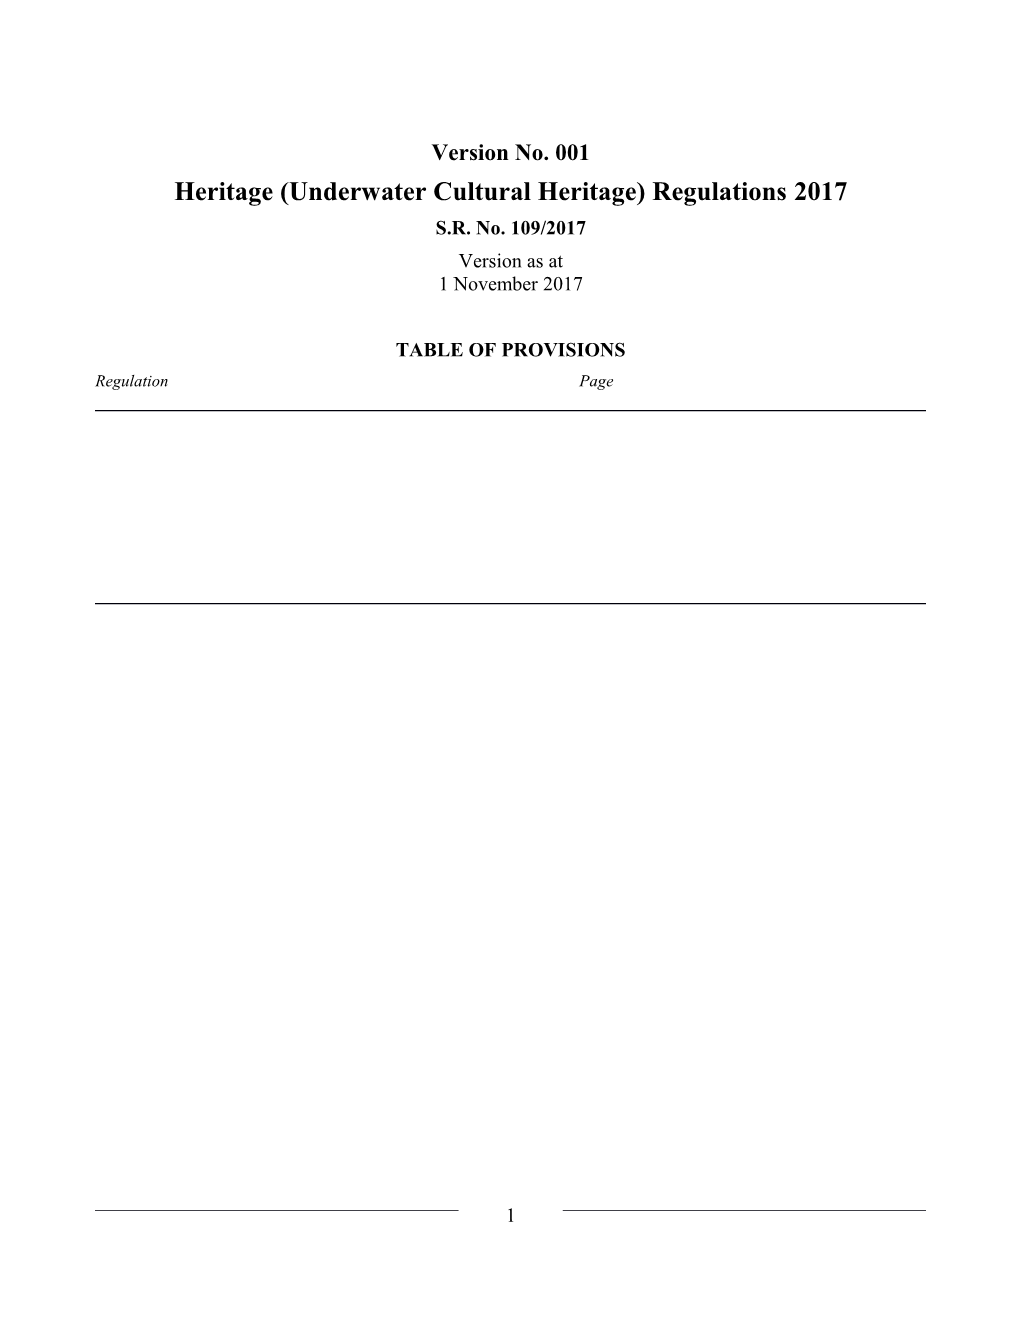 Heritage (Underwater Cultural Heritage) Regulations 2017